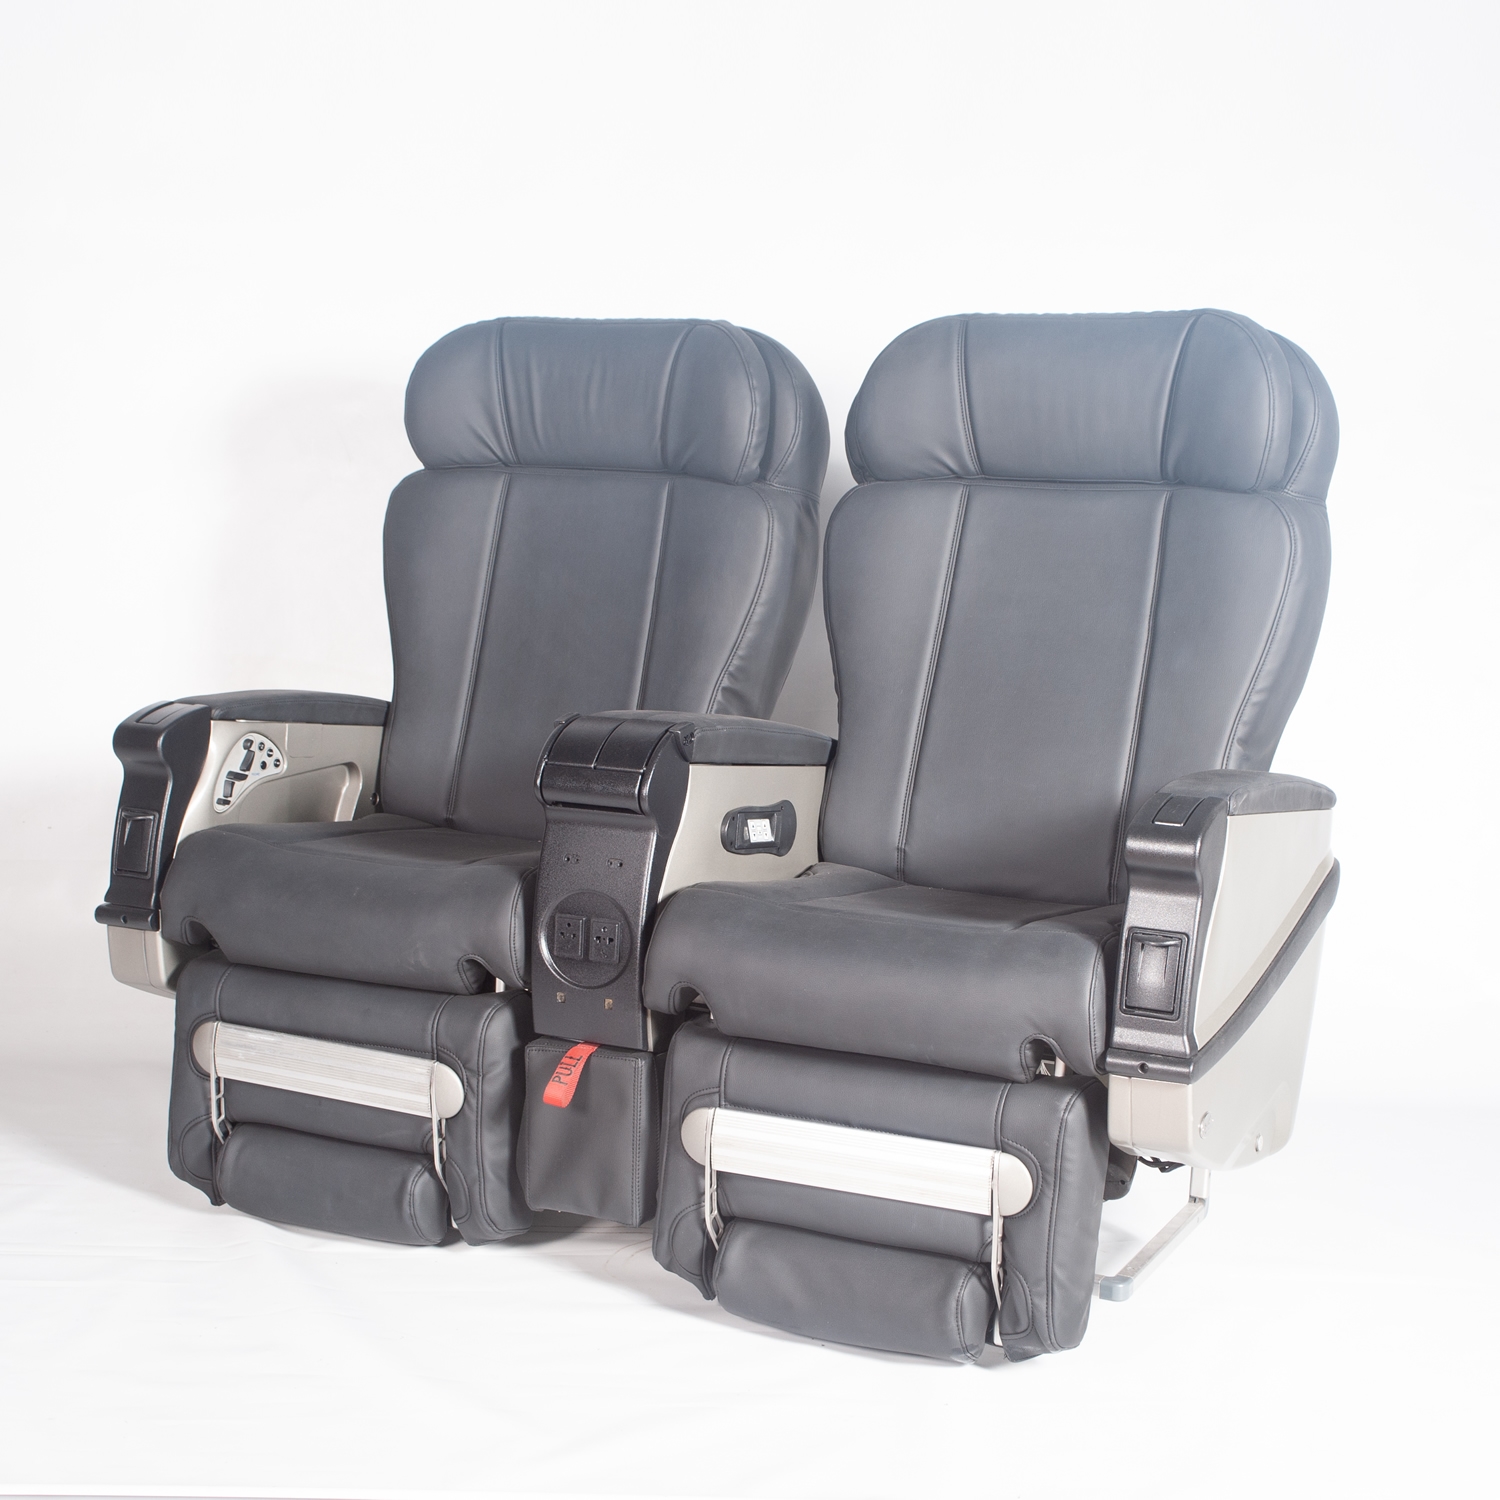 Recaro Electronic First Class Seat - Double